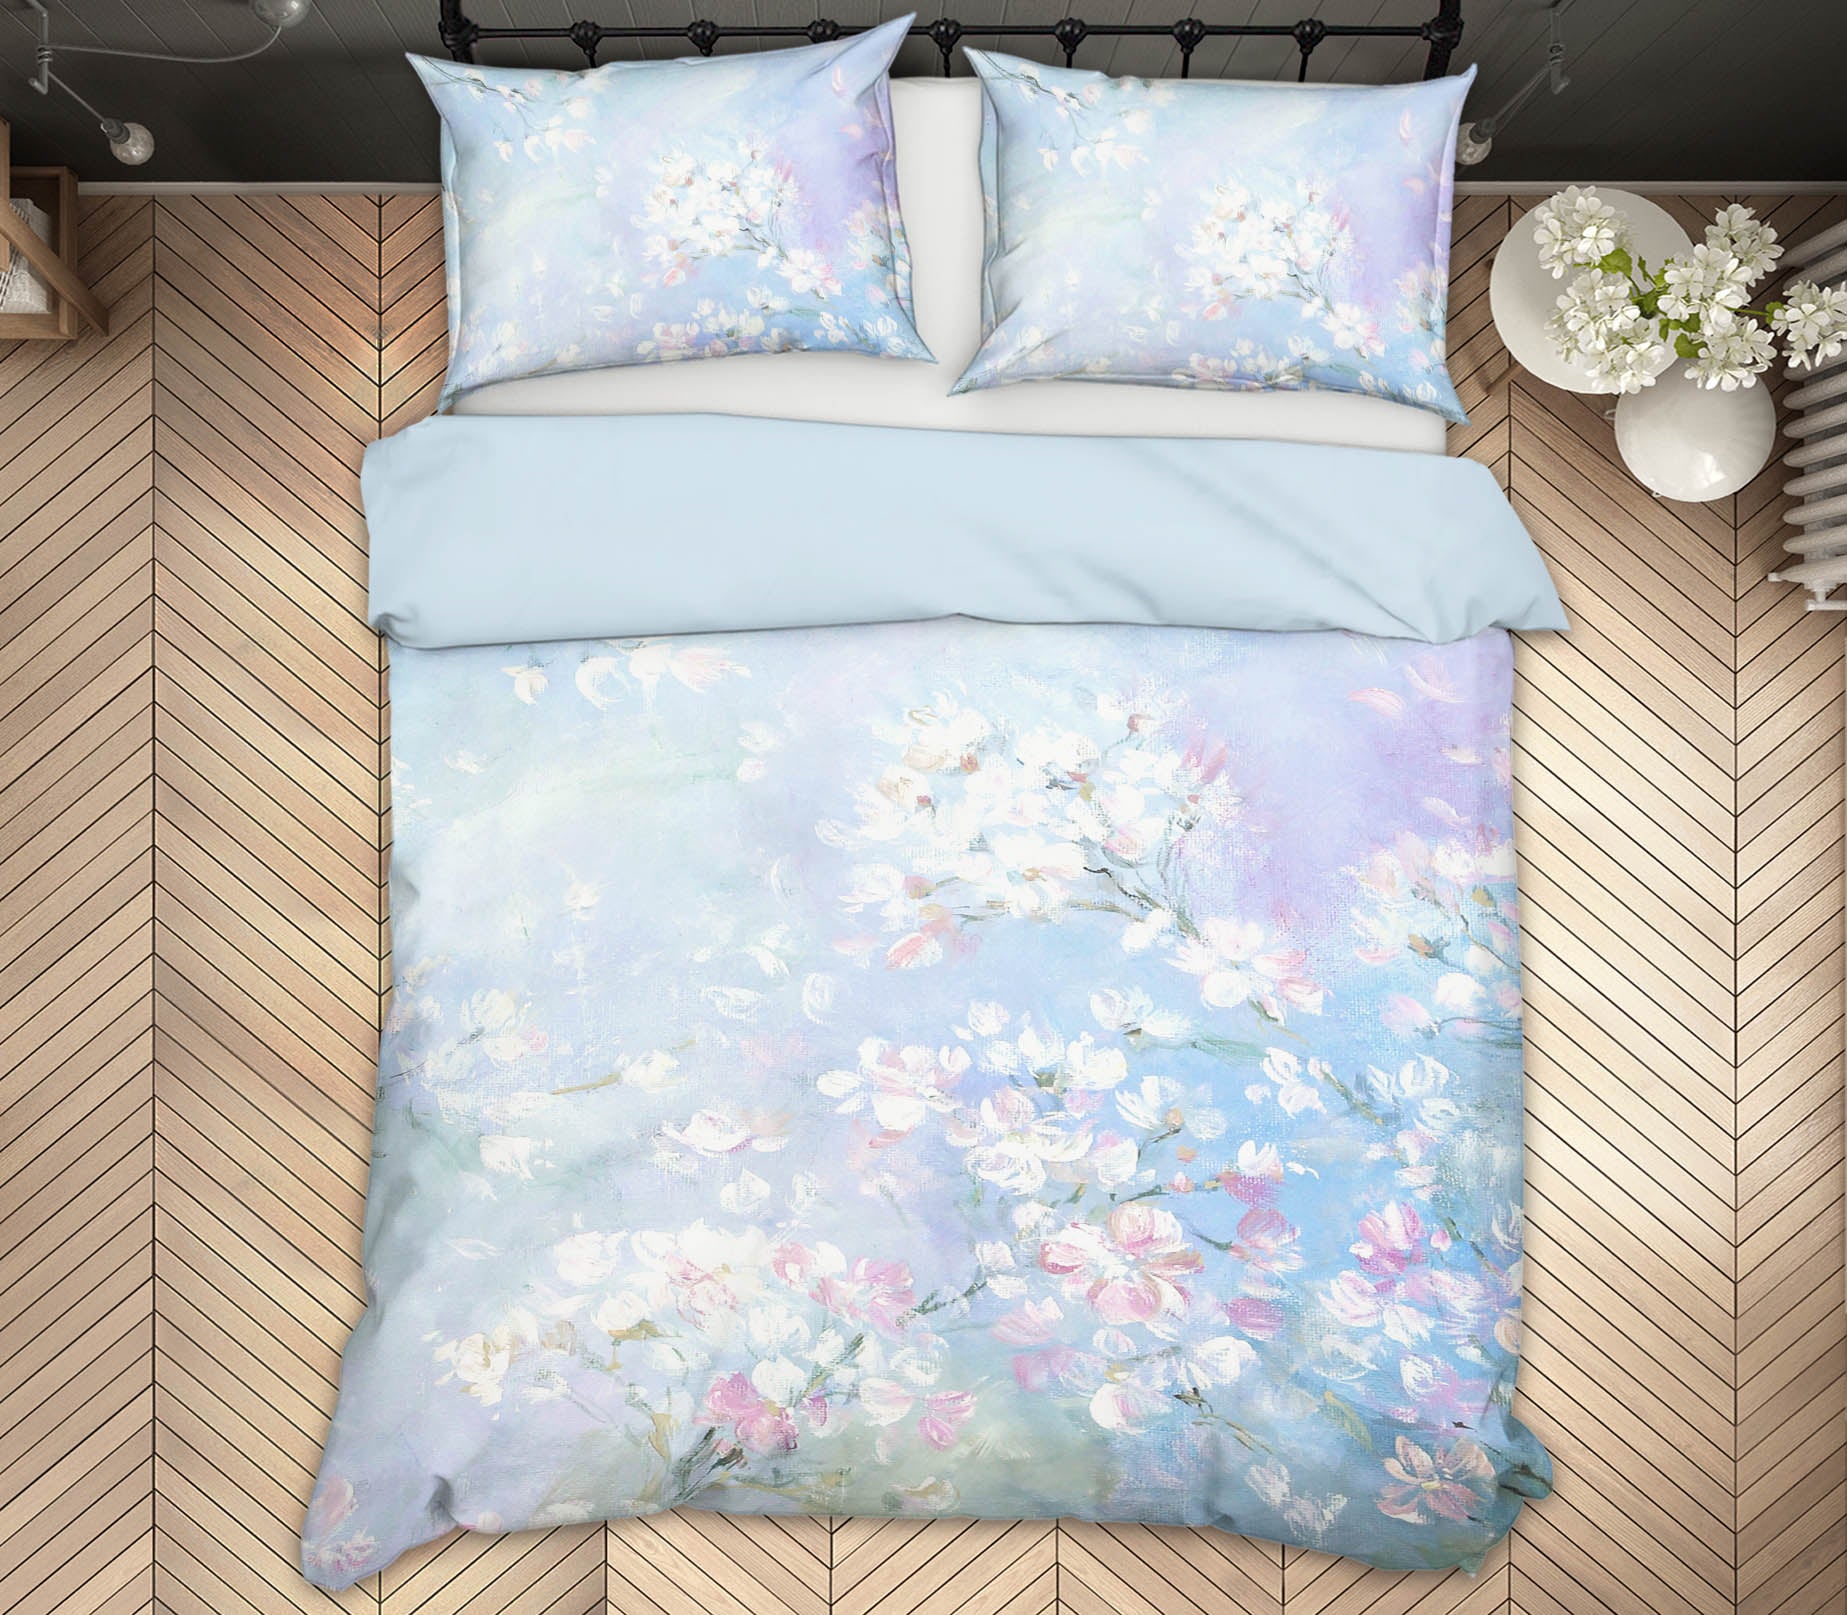 3D Rose Petal 124 Debi Coules Bedding Bed Pillowcases Quilt